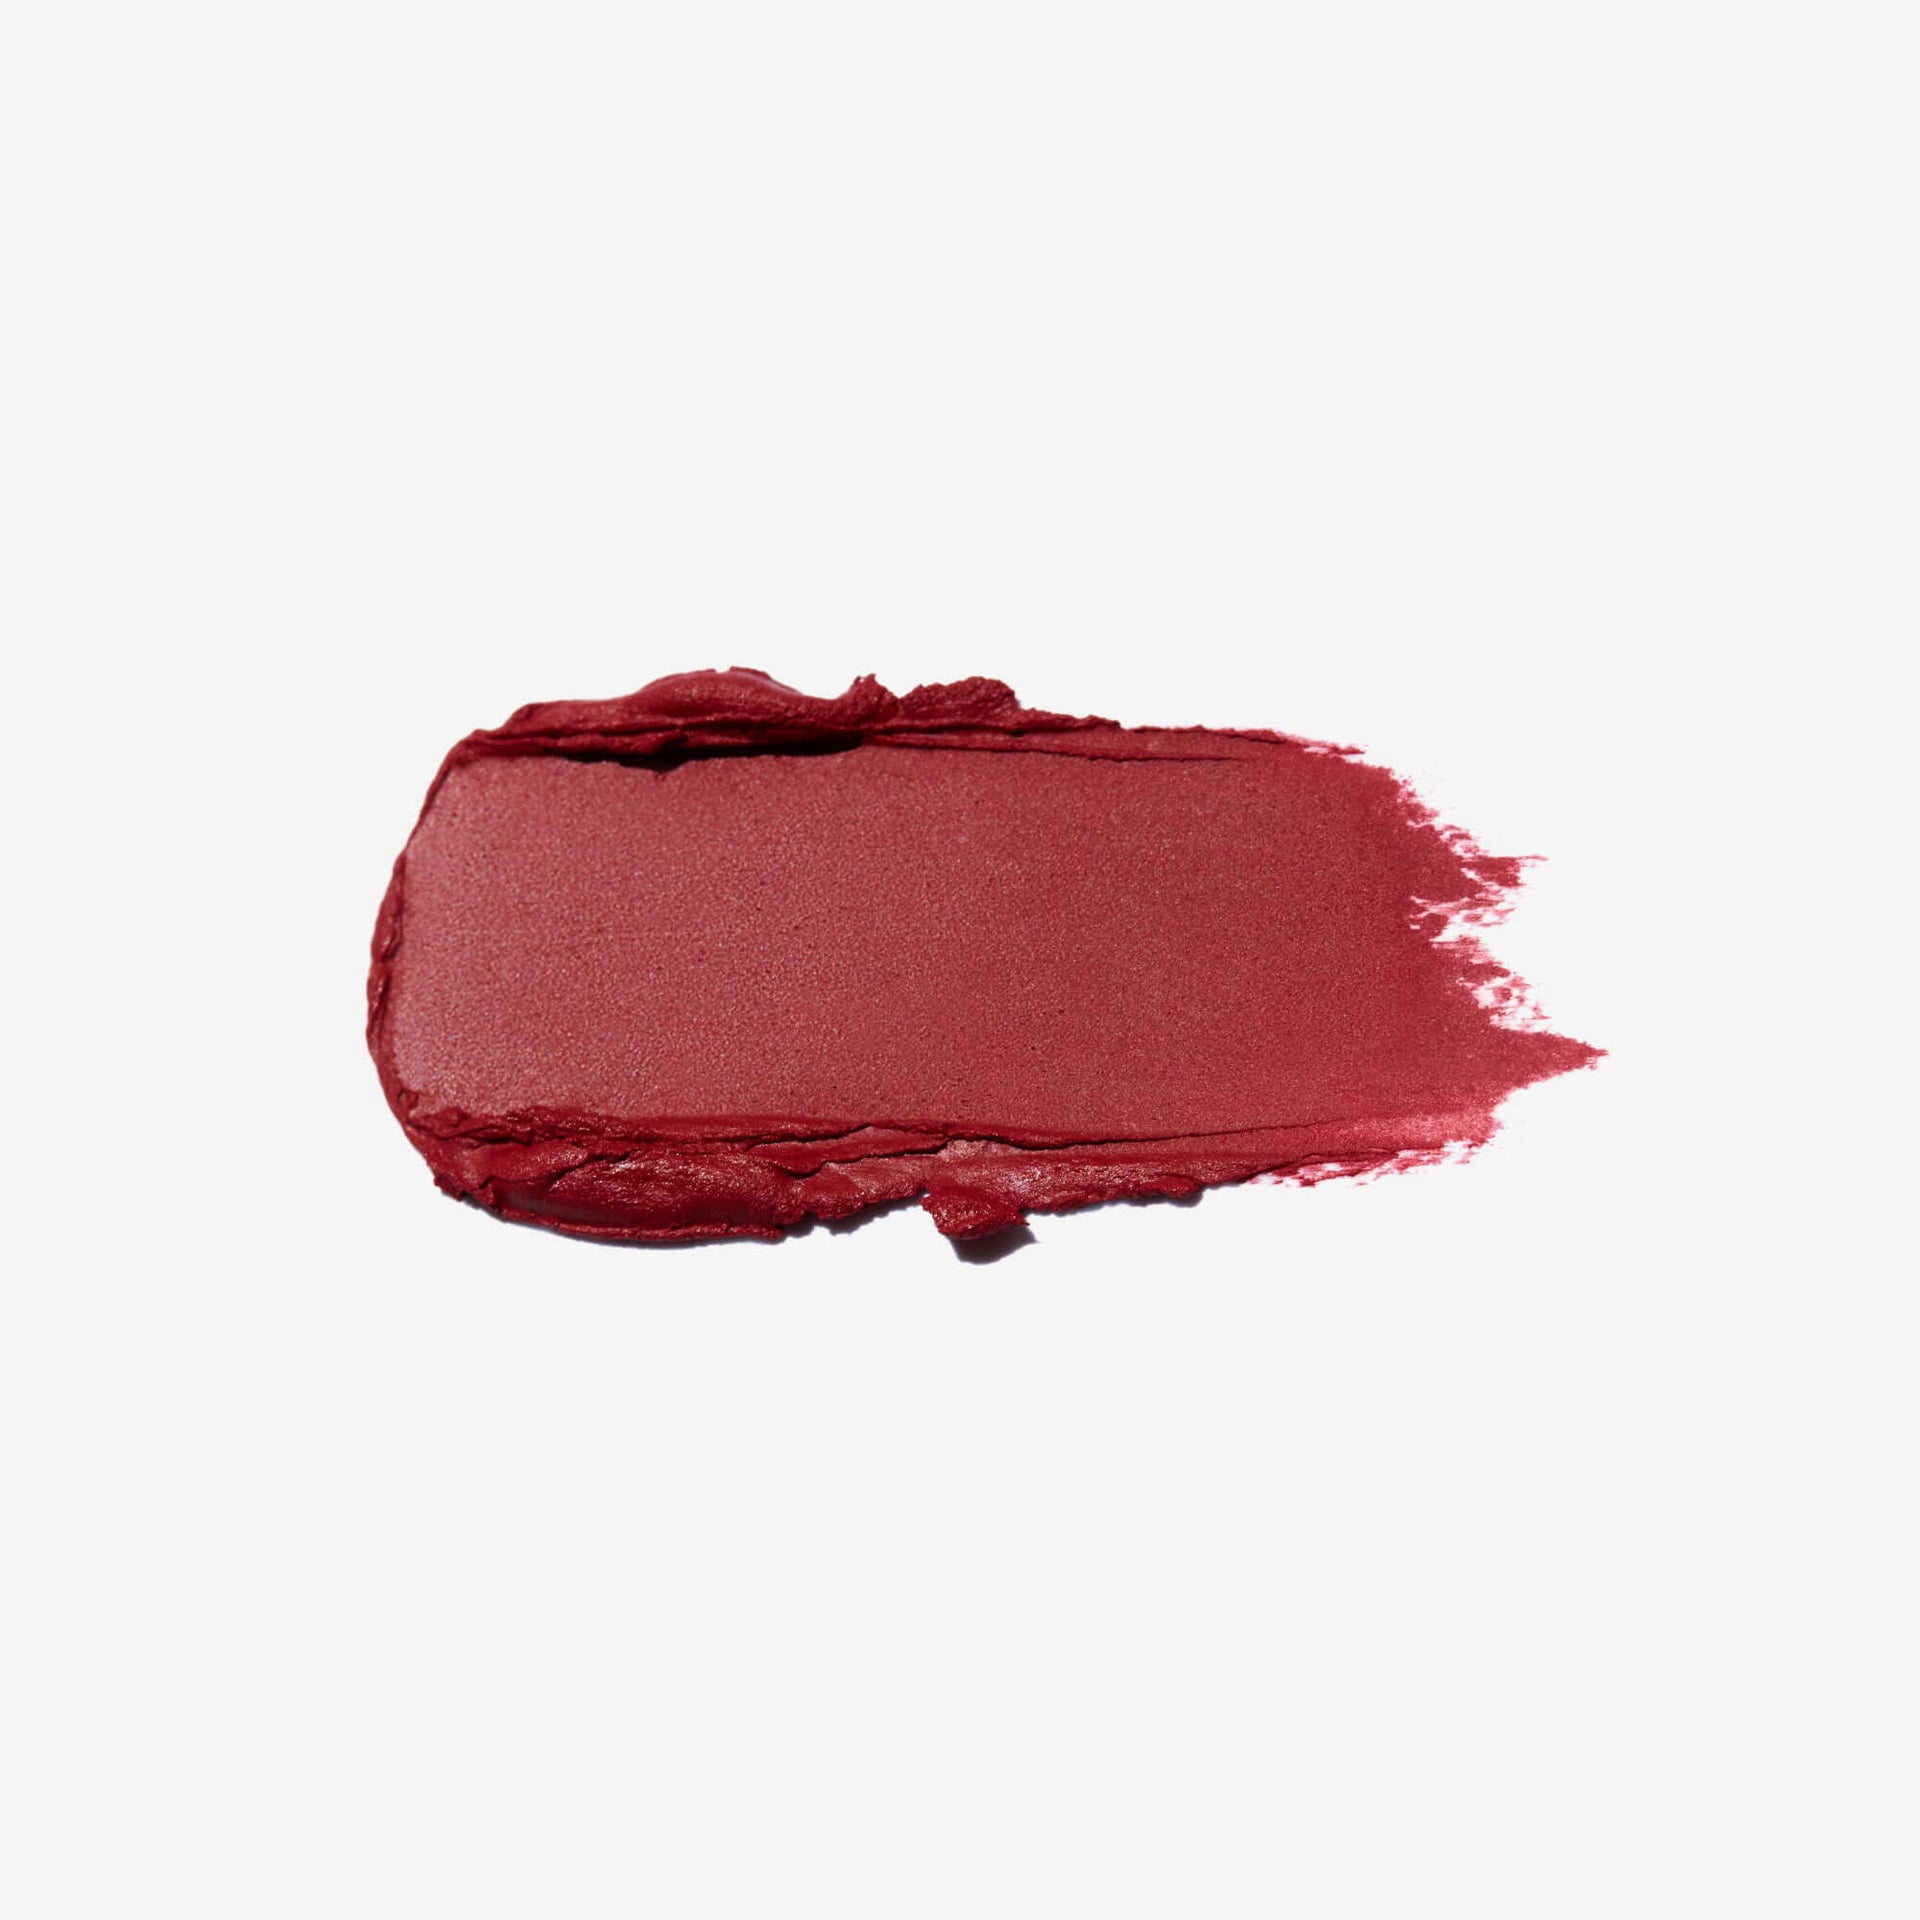 Pomegranate |Limited Edition Satin Lipstick Swatch Shade Pomegranate